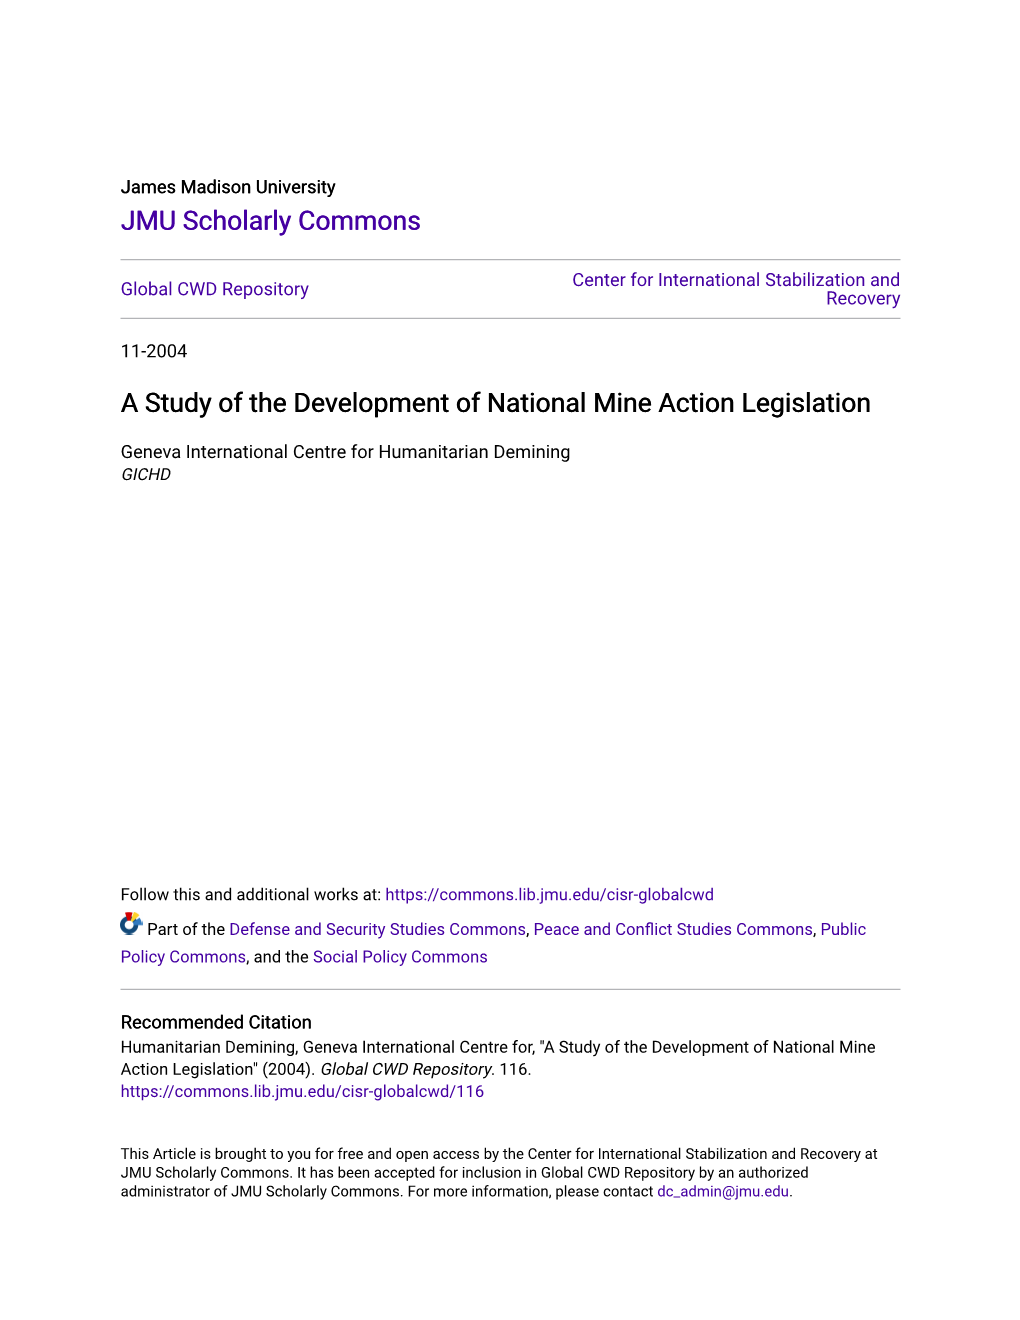 A Study of the Development of National Mine Action Legislation